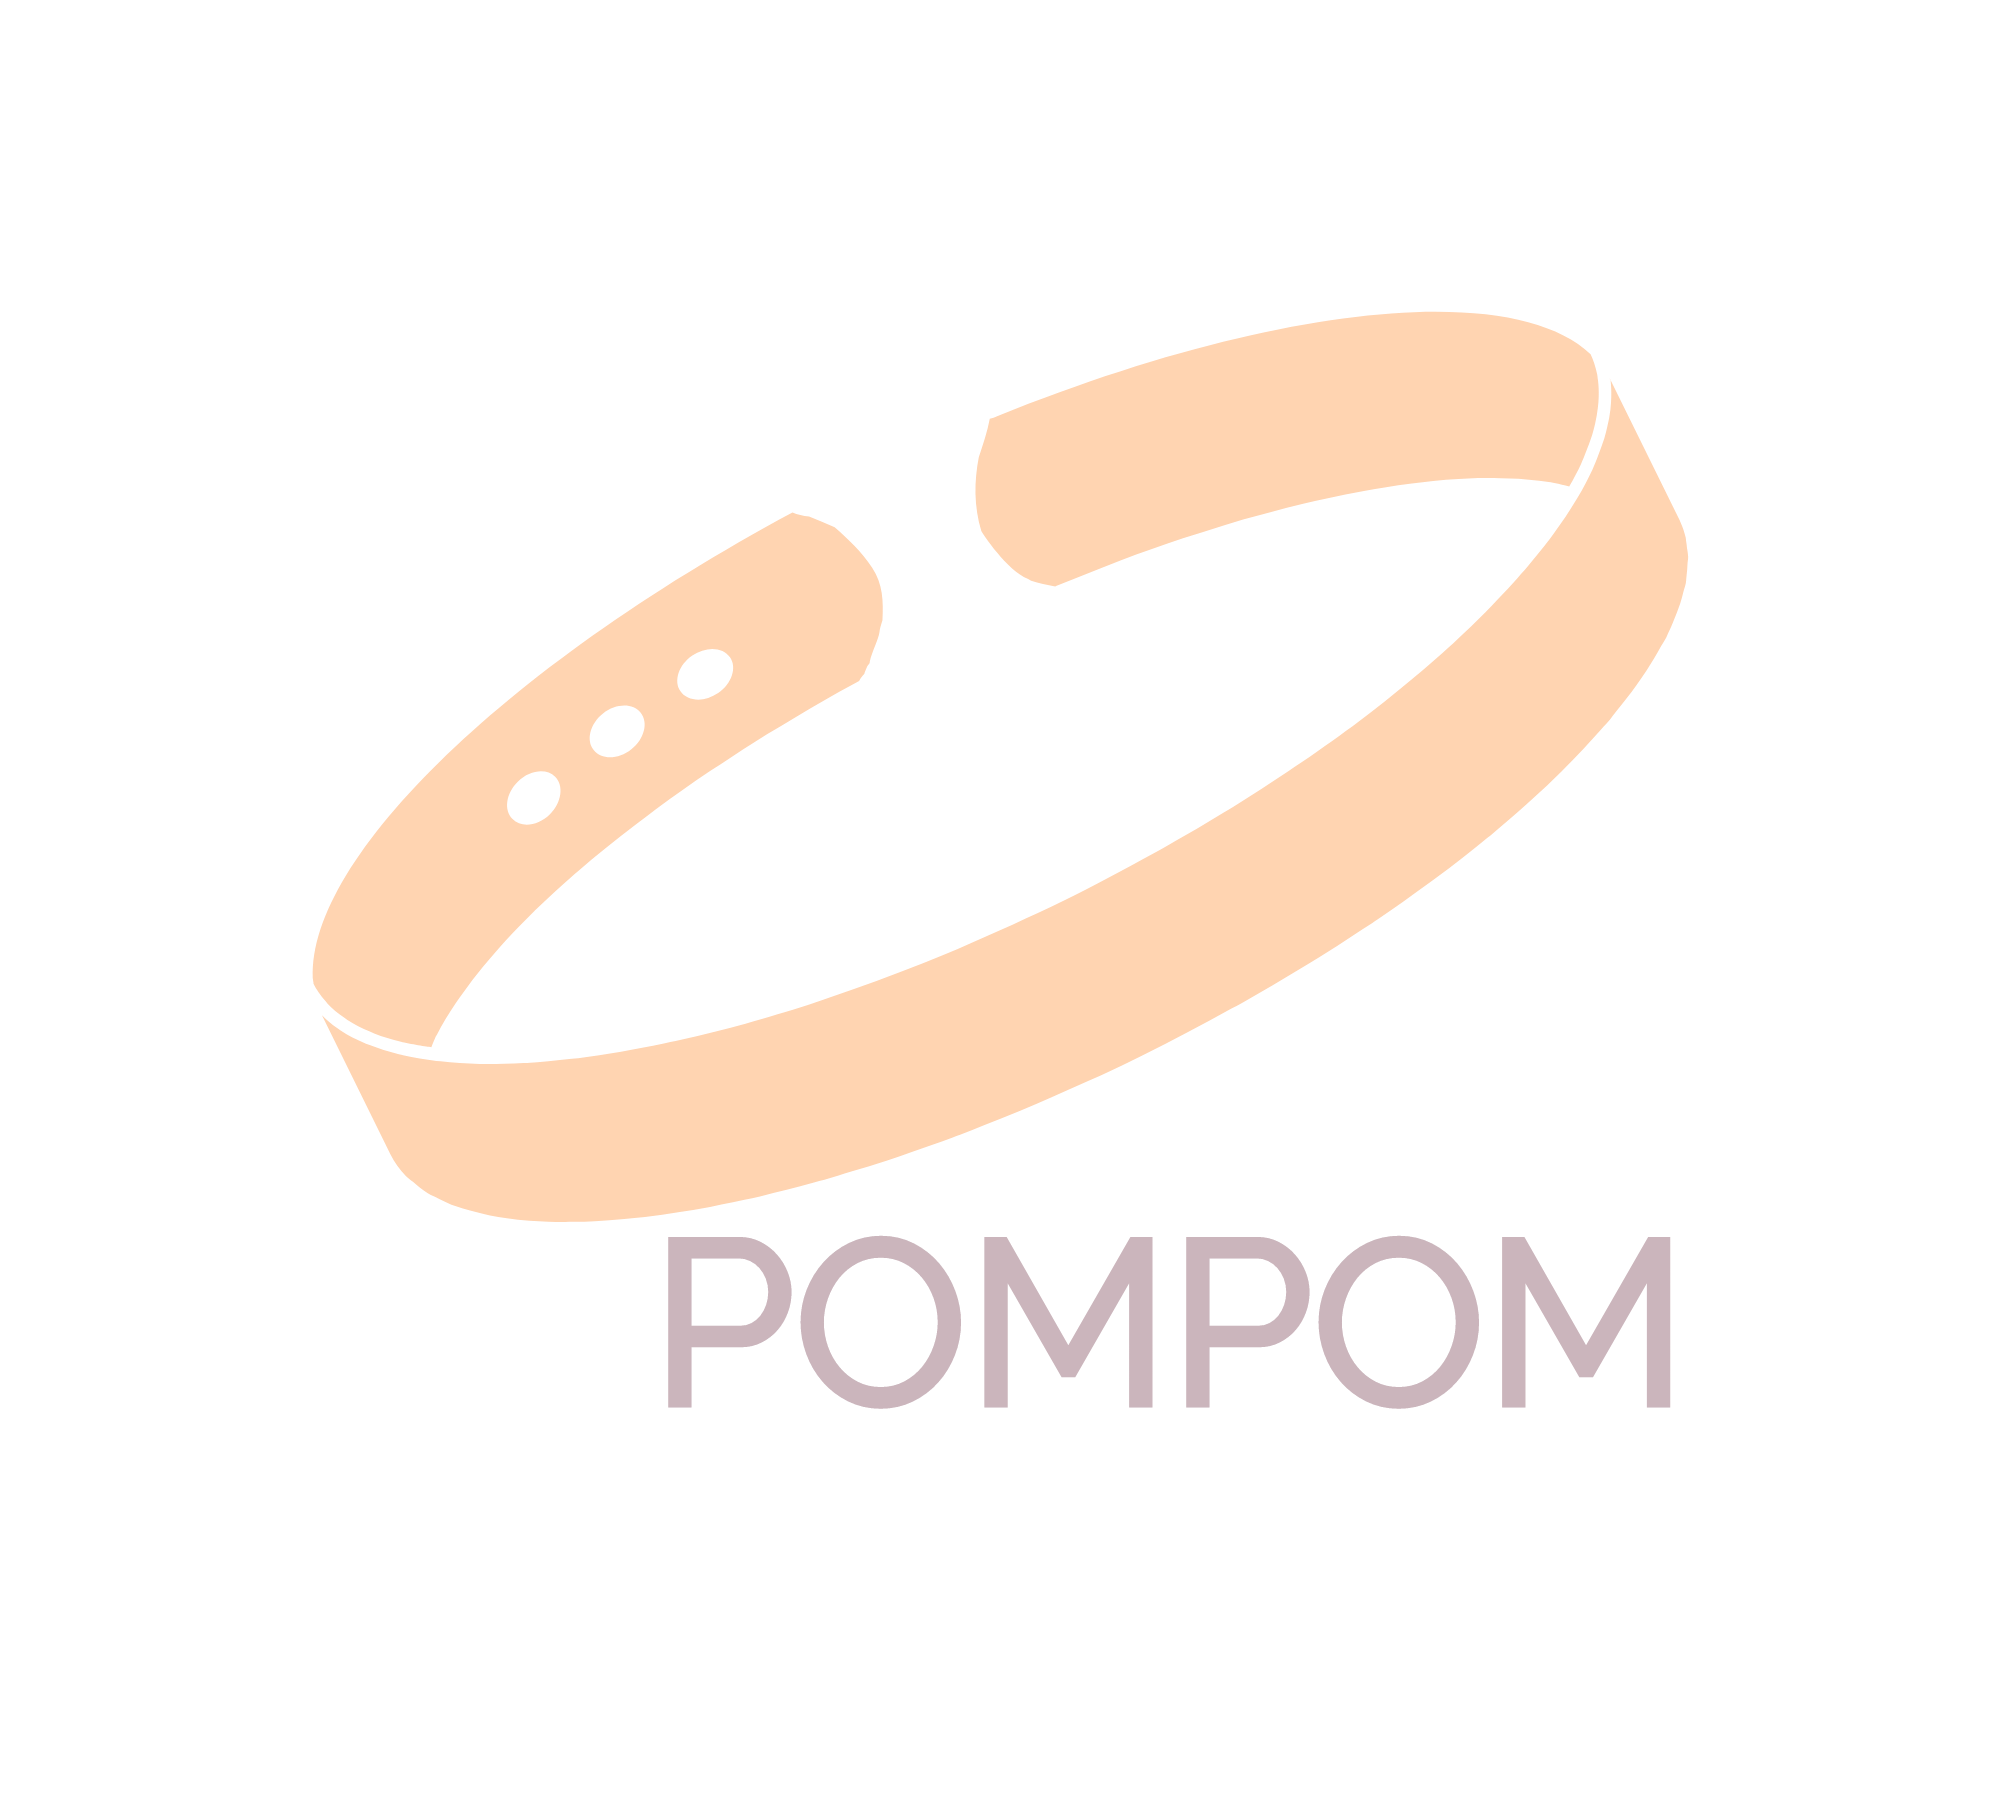 POMPOM (Copy)